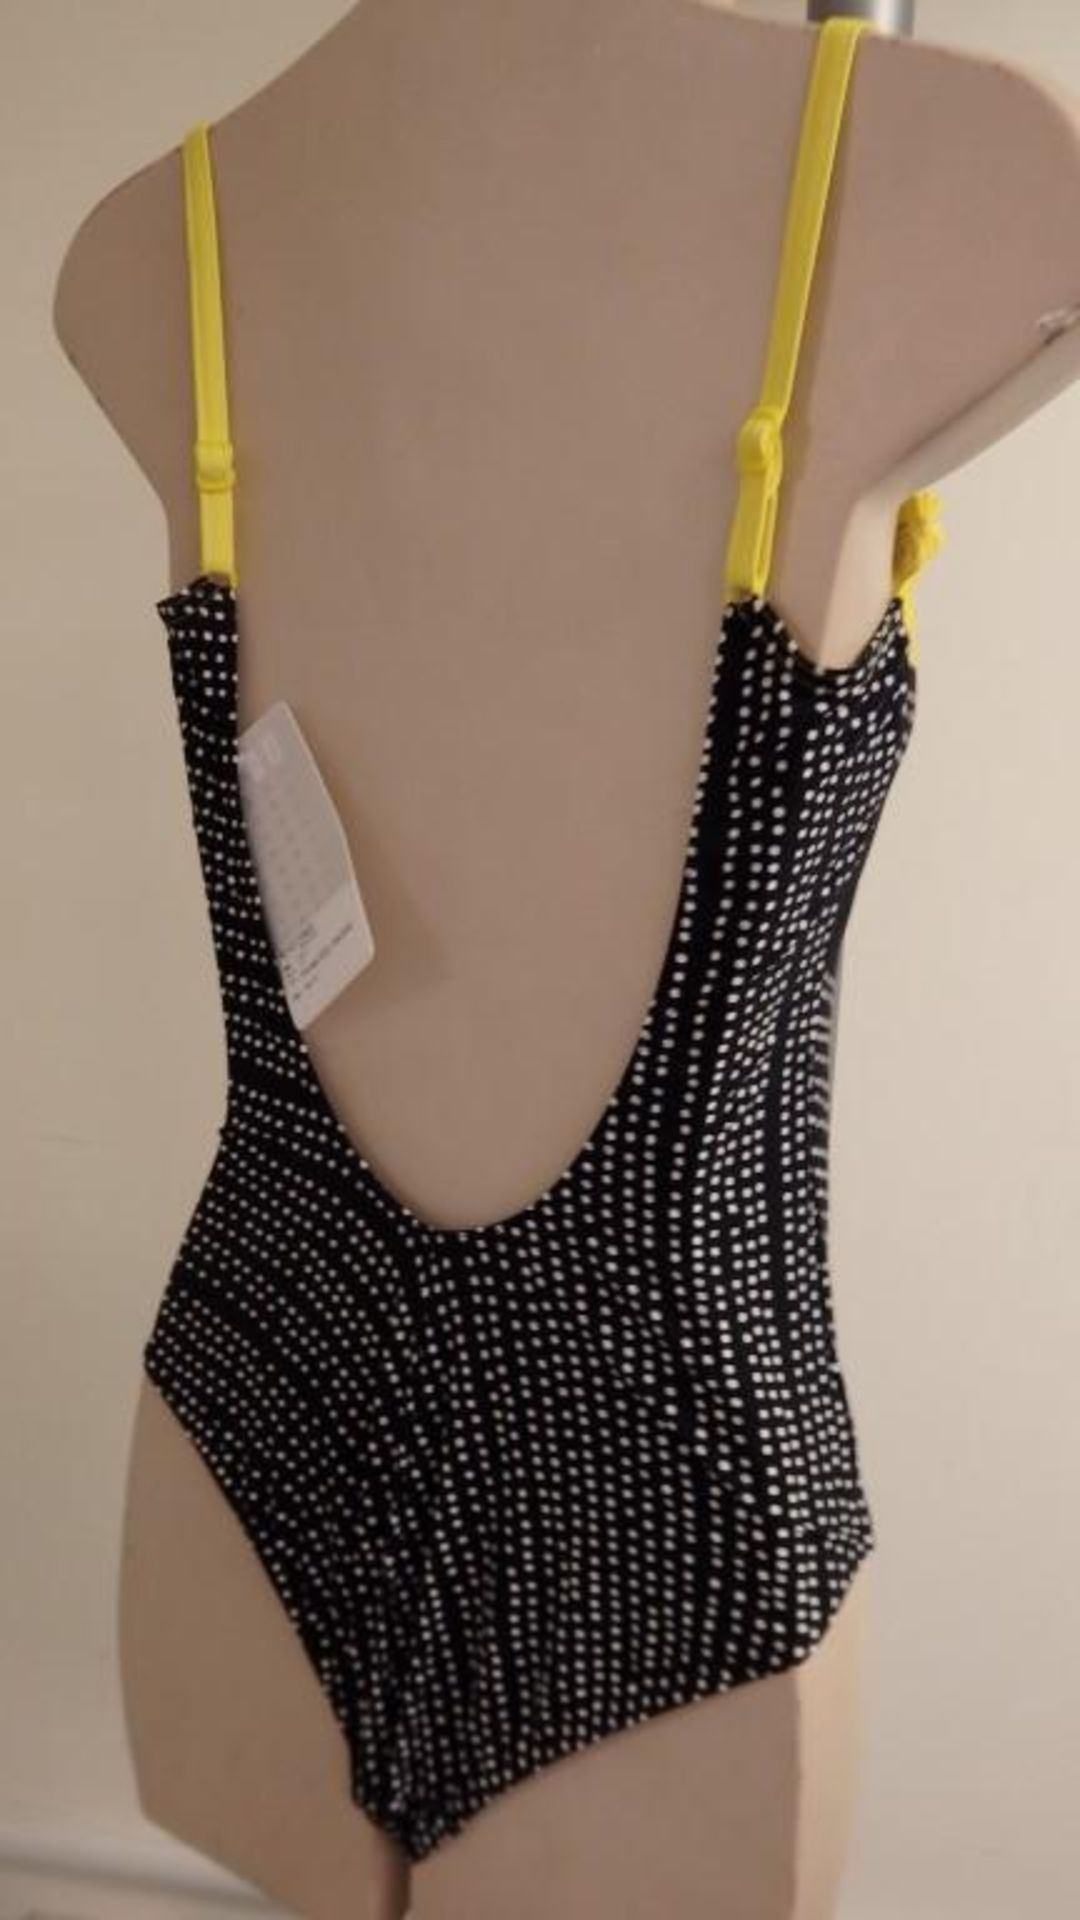 1 x Rasurel - Black Polka dot with canary yellow trim & frill Tobago Swimsuit - R21031 - Size 2 - UK - Image 5 of 8